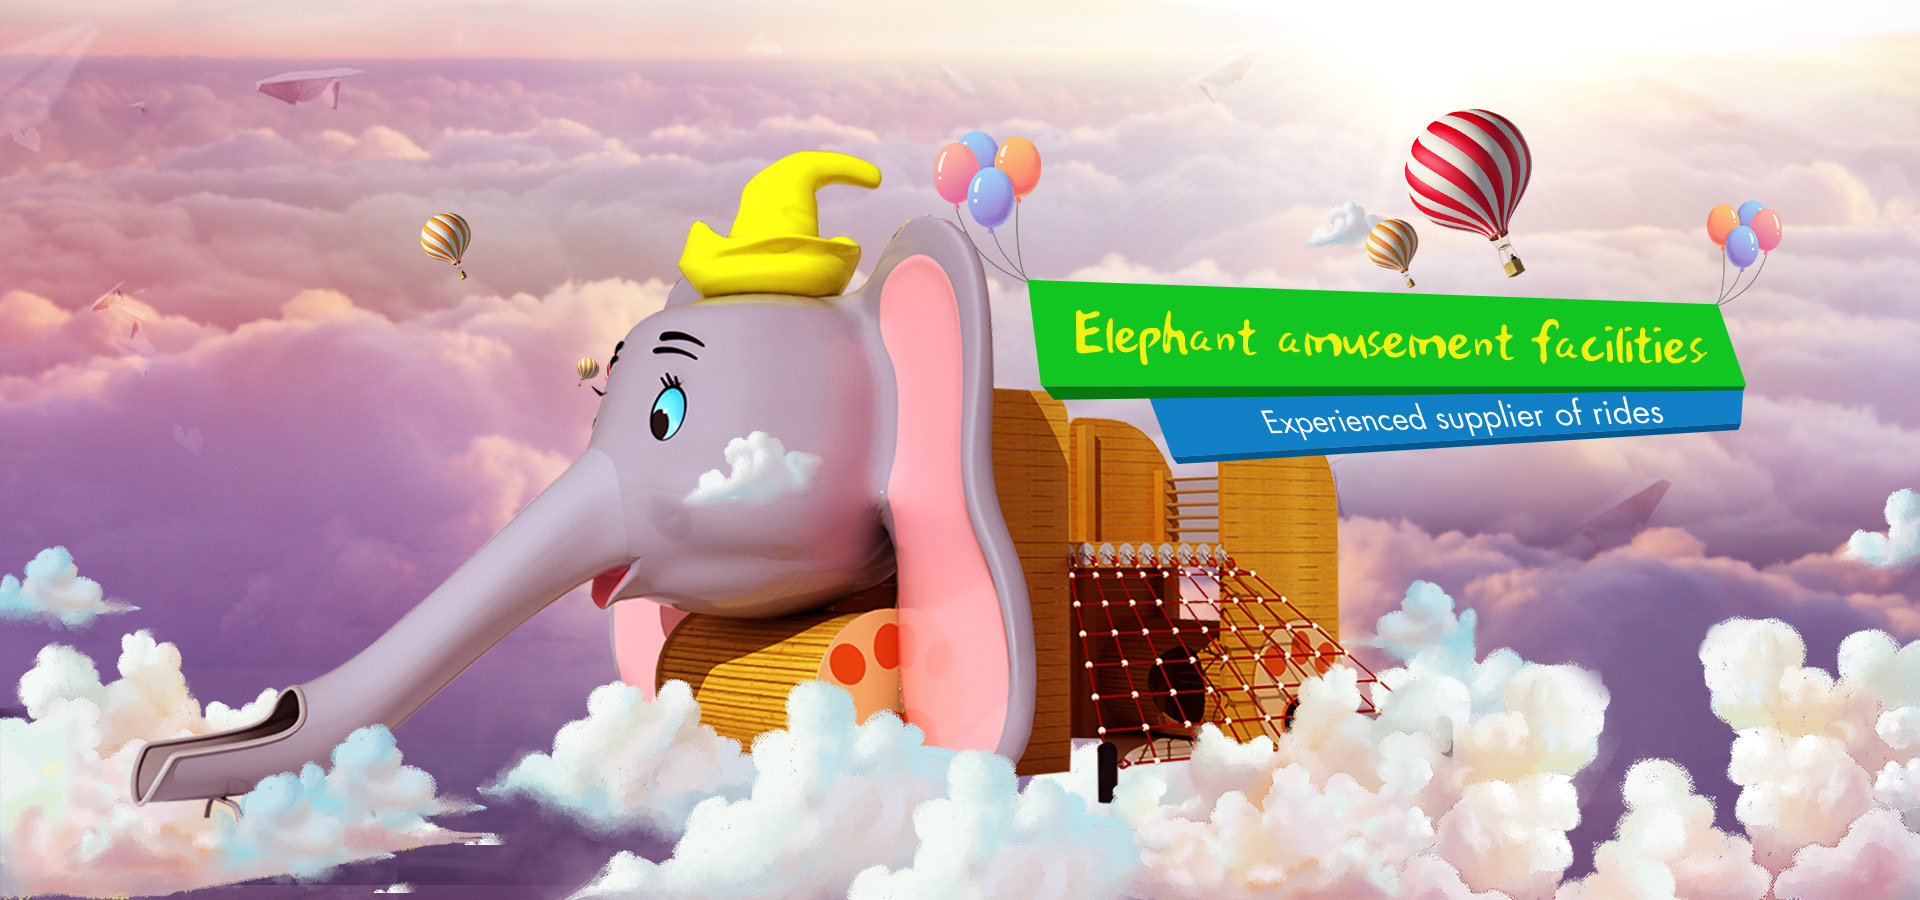 Elephant amusement facilities